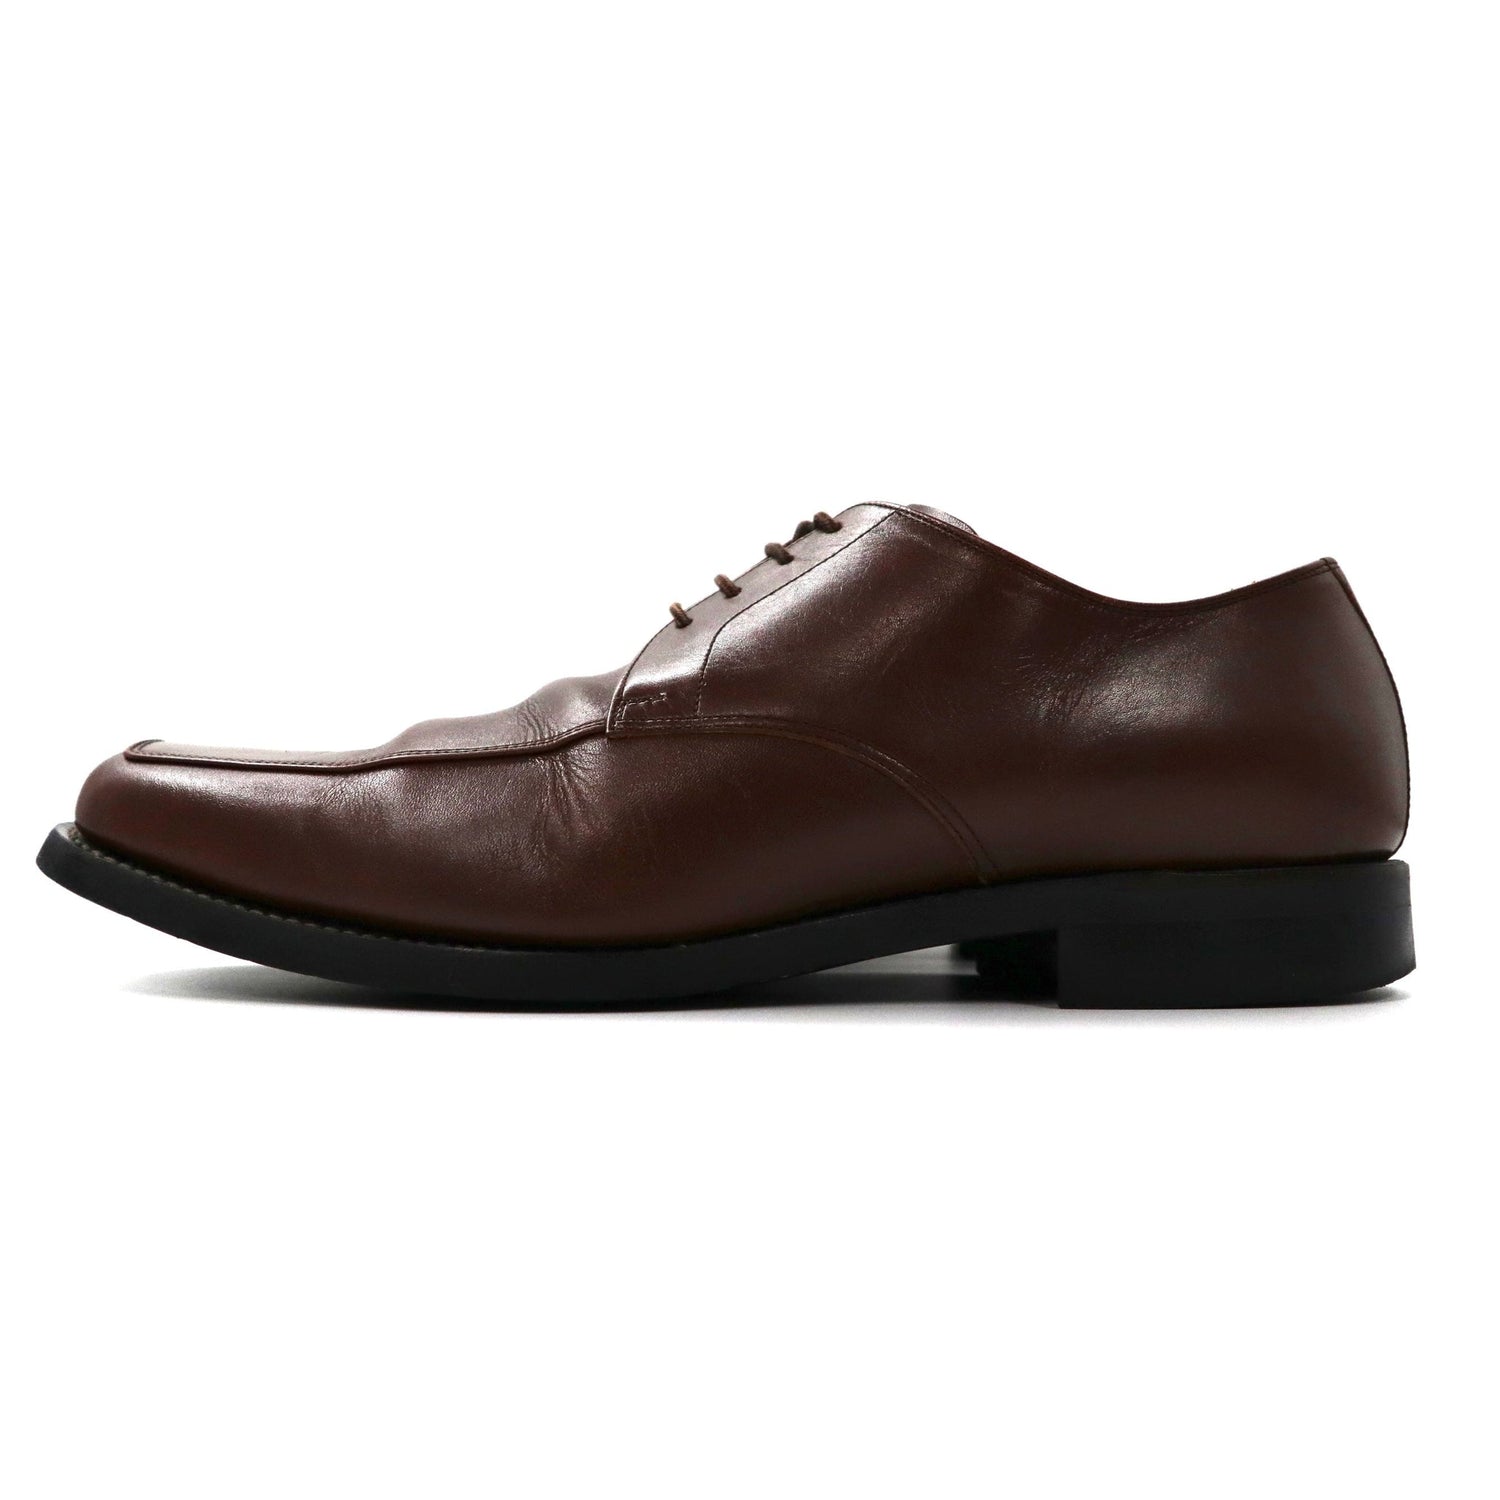 Scotch GRAIN Dress Shoes US7.5 Brown Leather Square Tou F-0374 